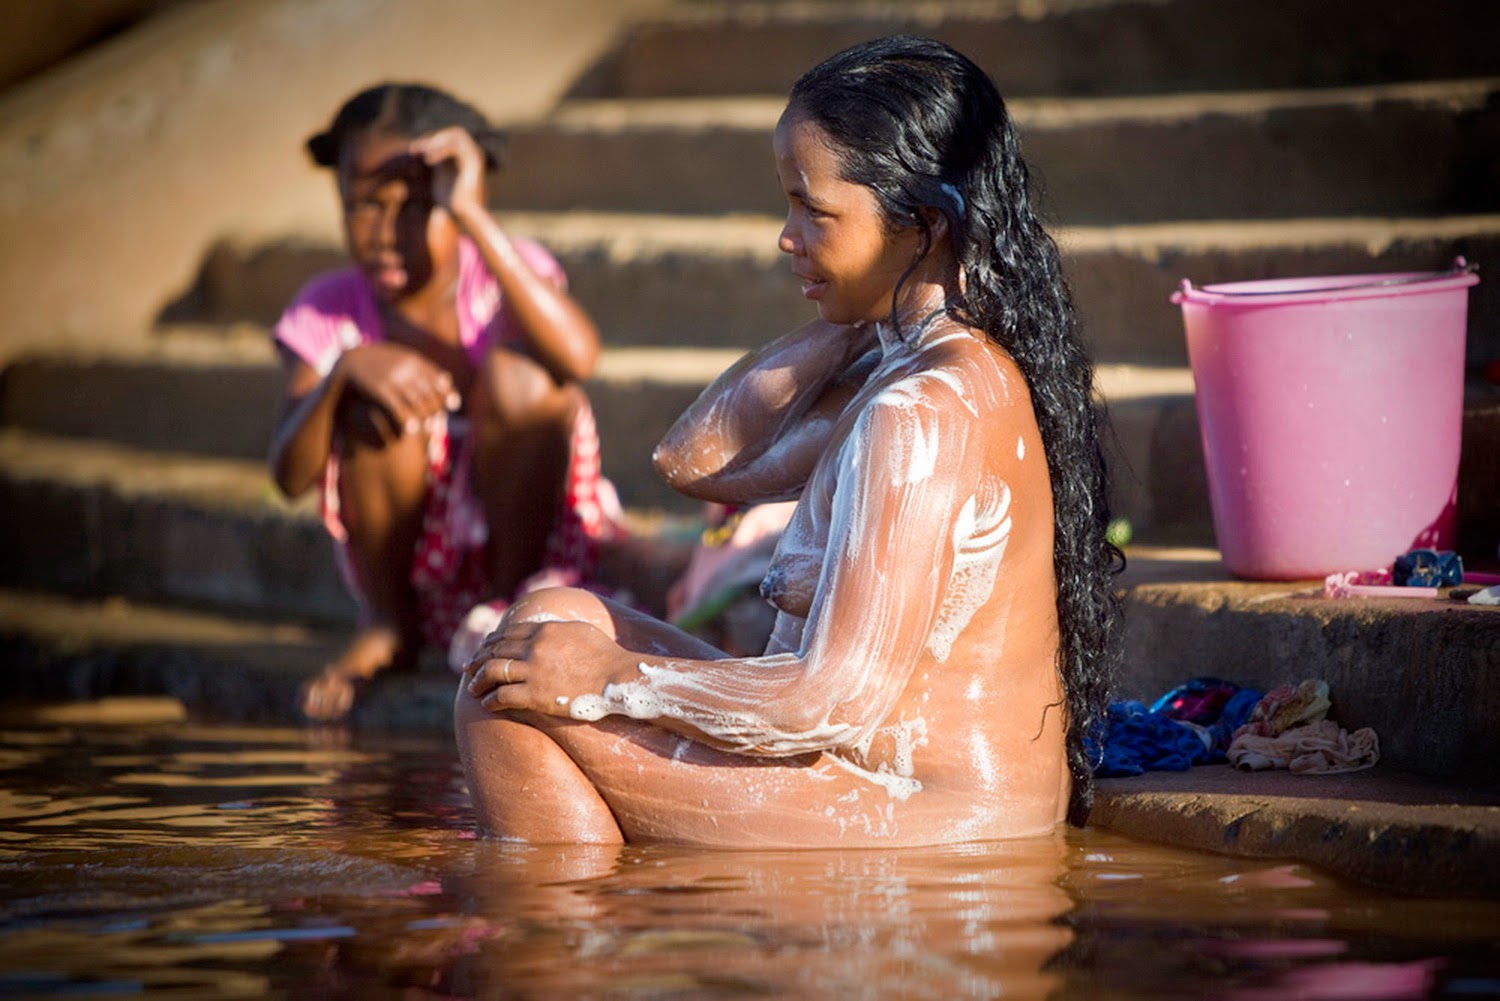 Indian women bath naked